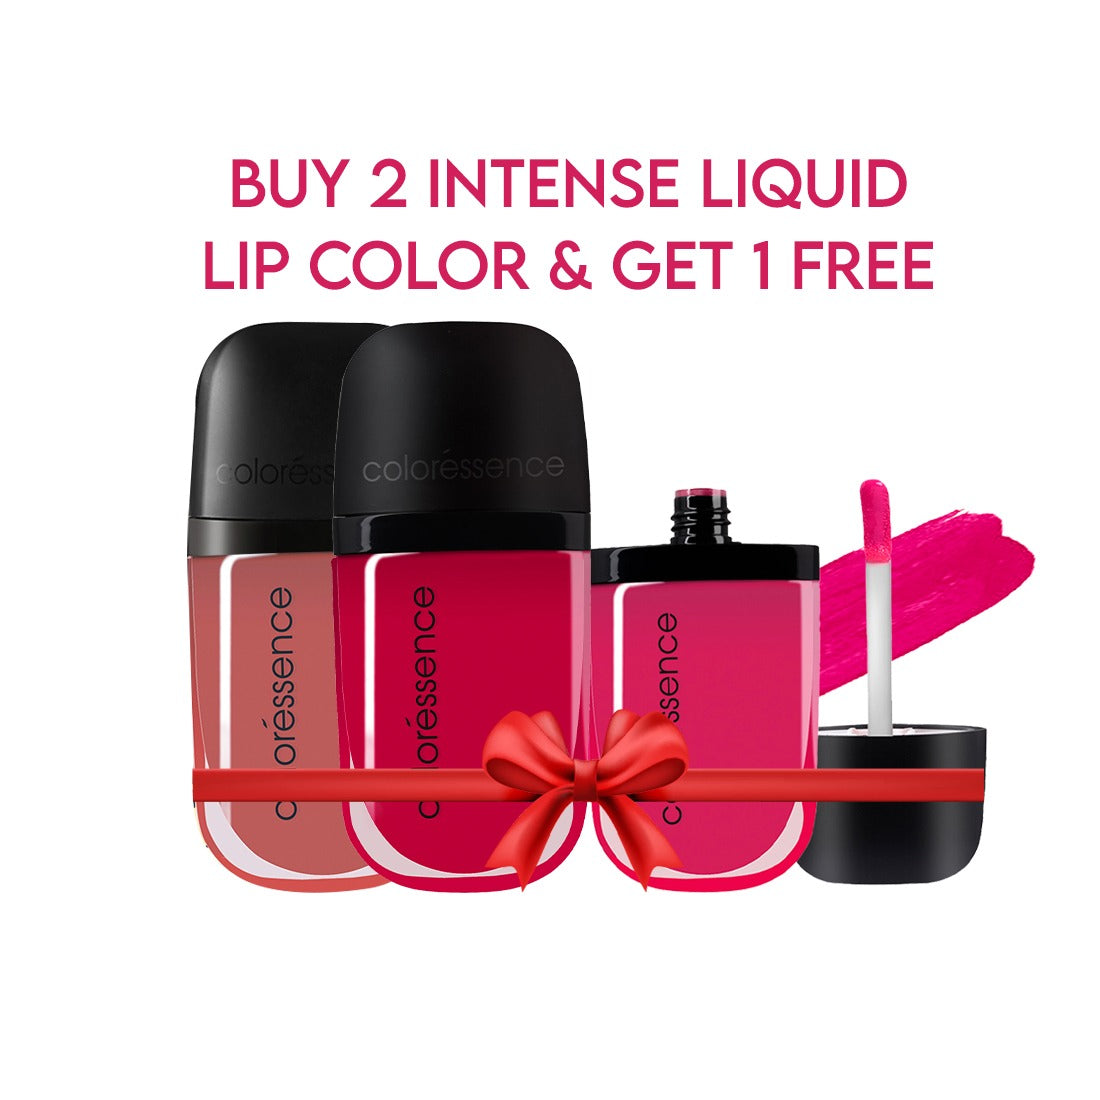 Buy 2 Intense Liquid Lip Color & Get 1 FREE